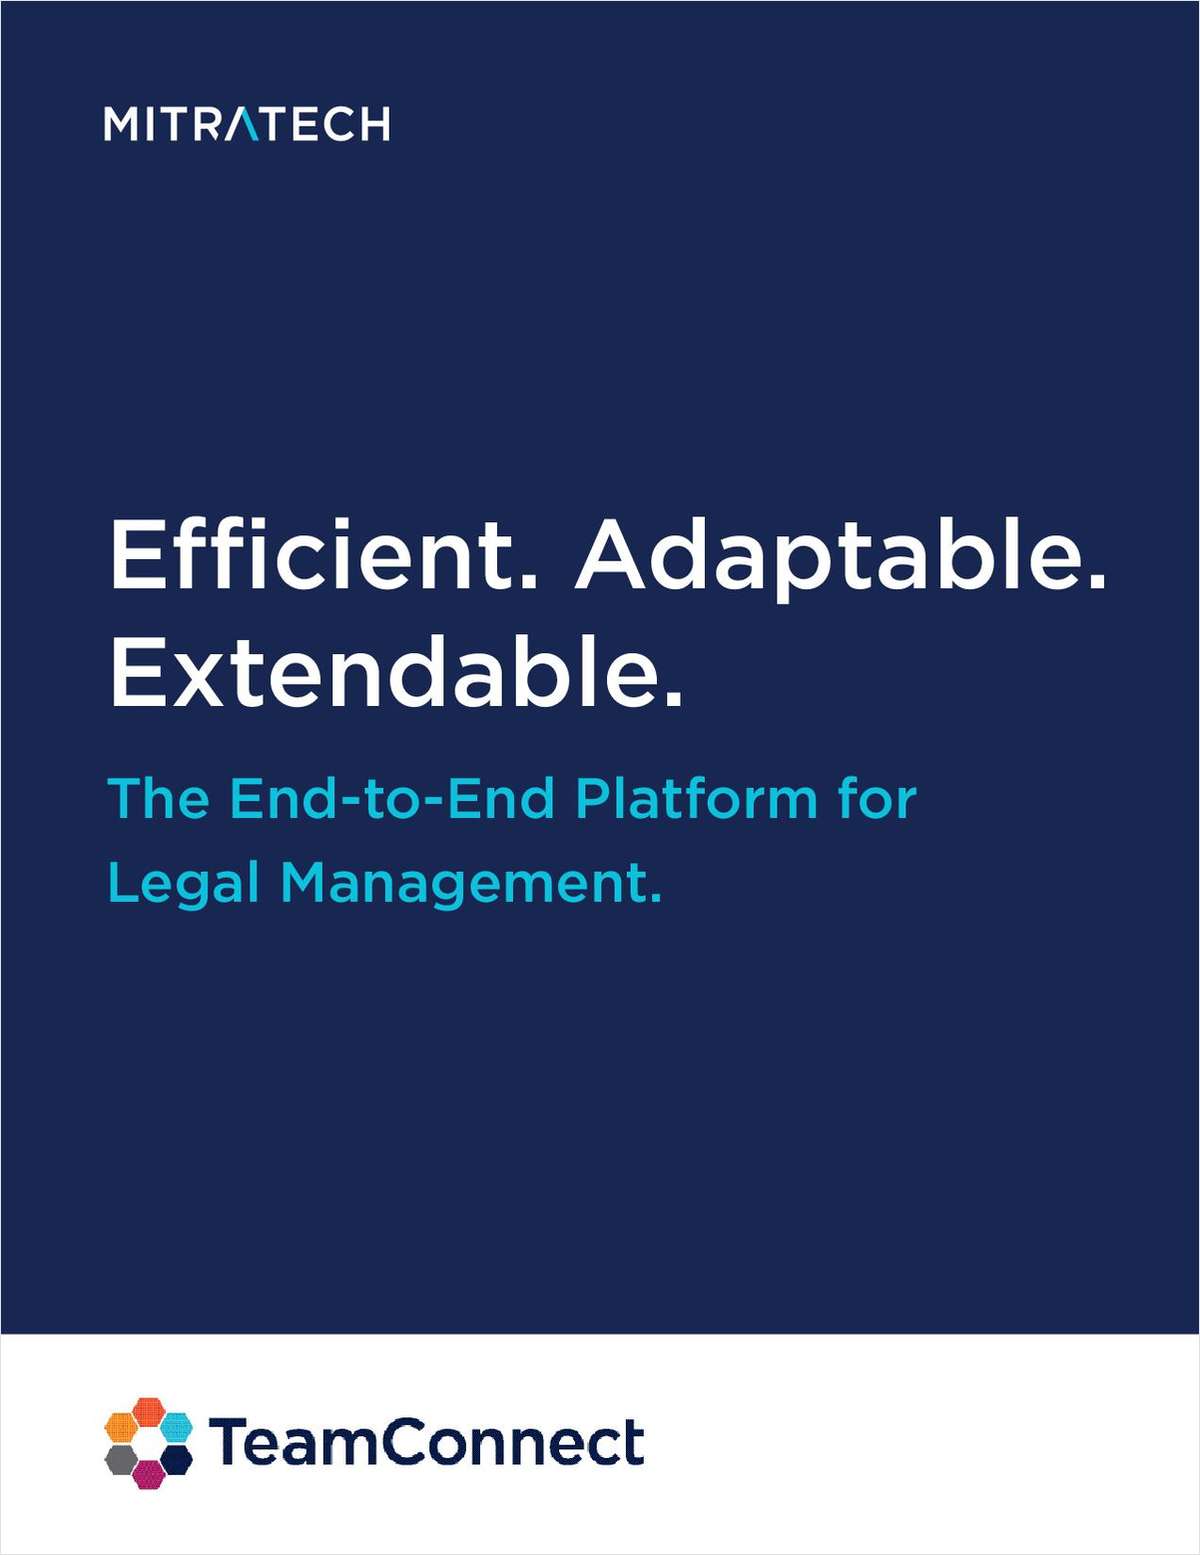 Brochure: Enterprise Legal Management with TeamConnect